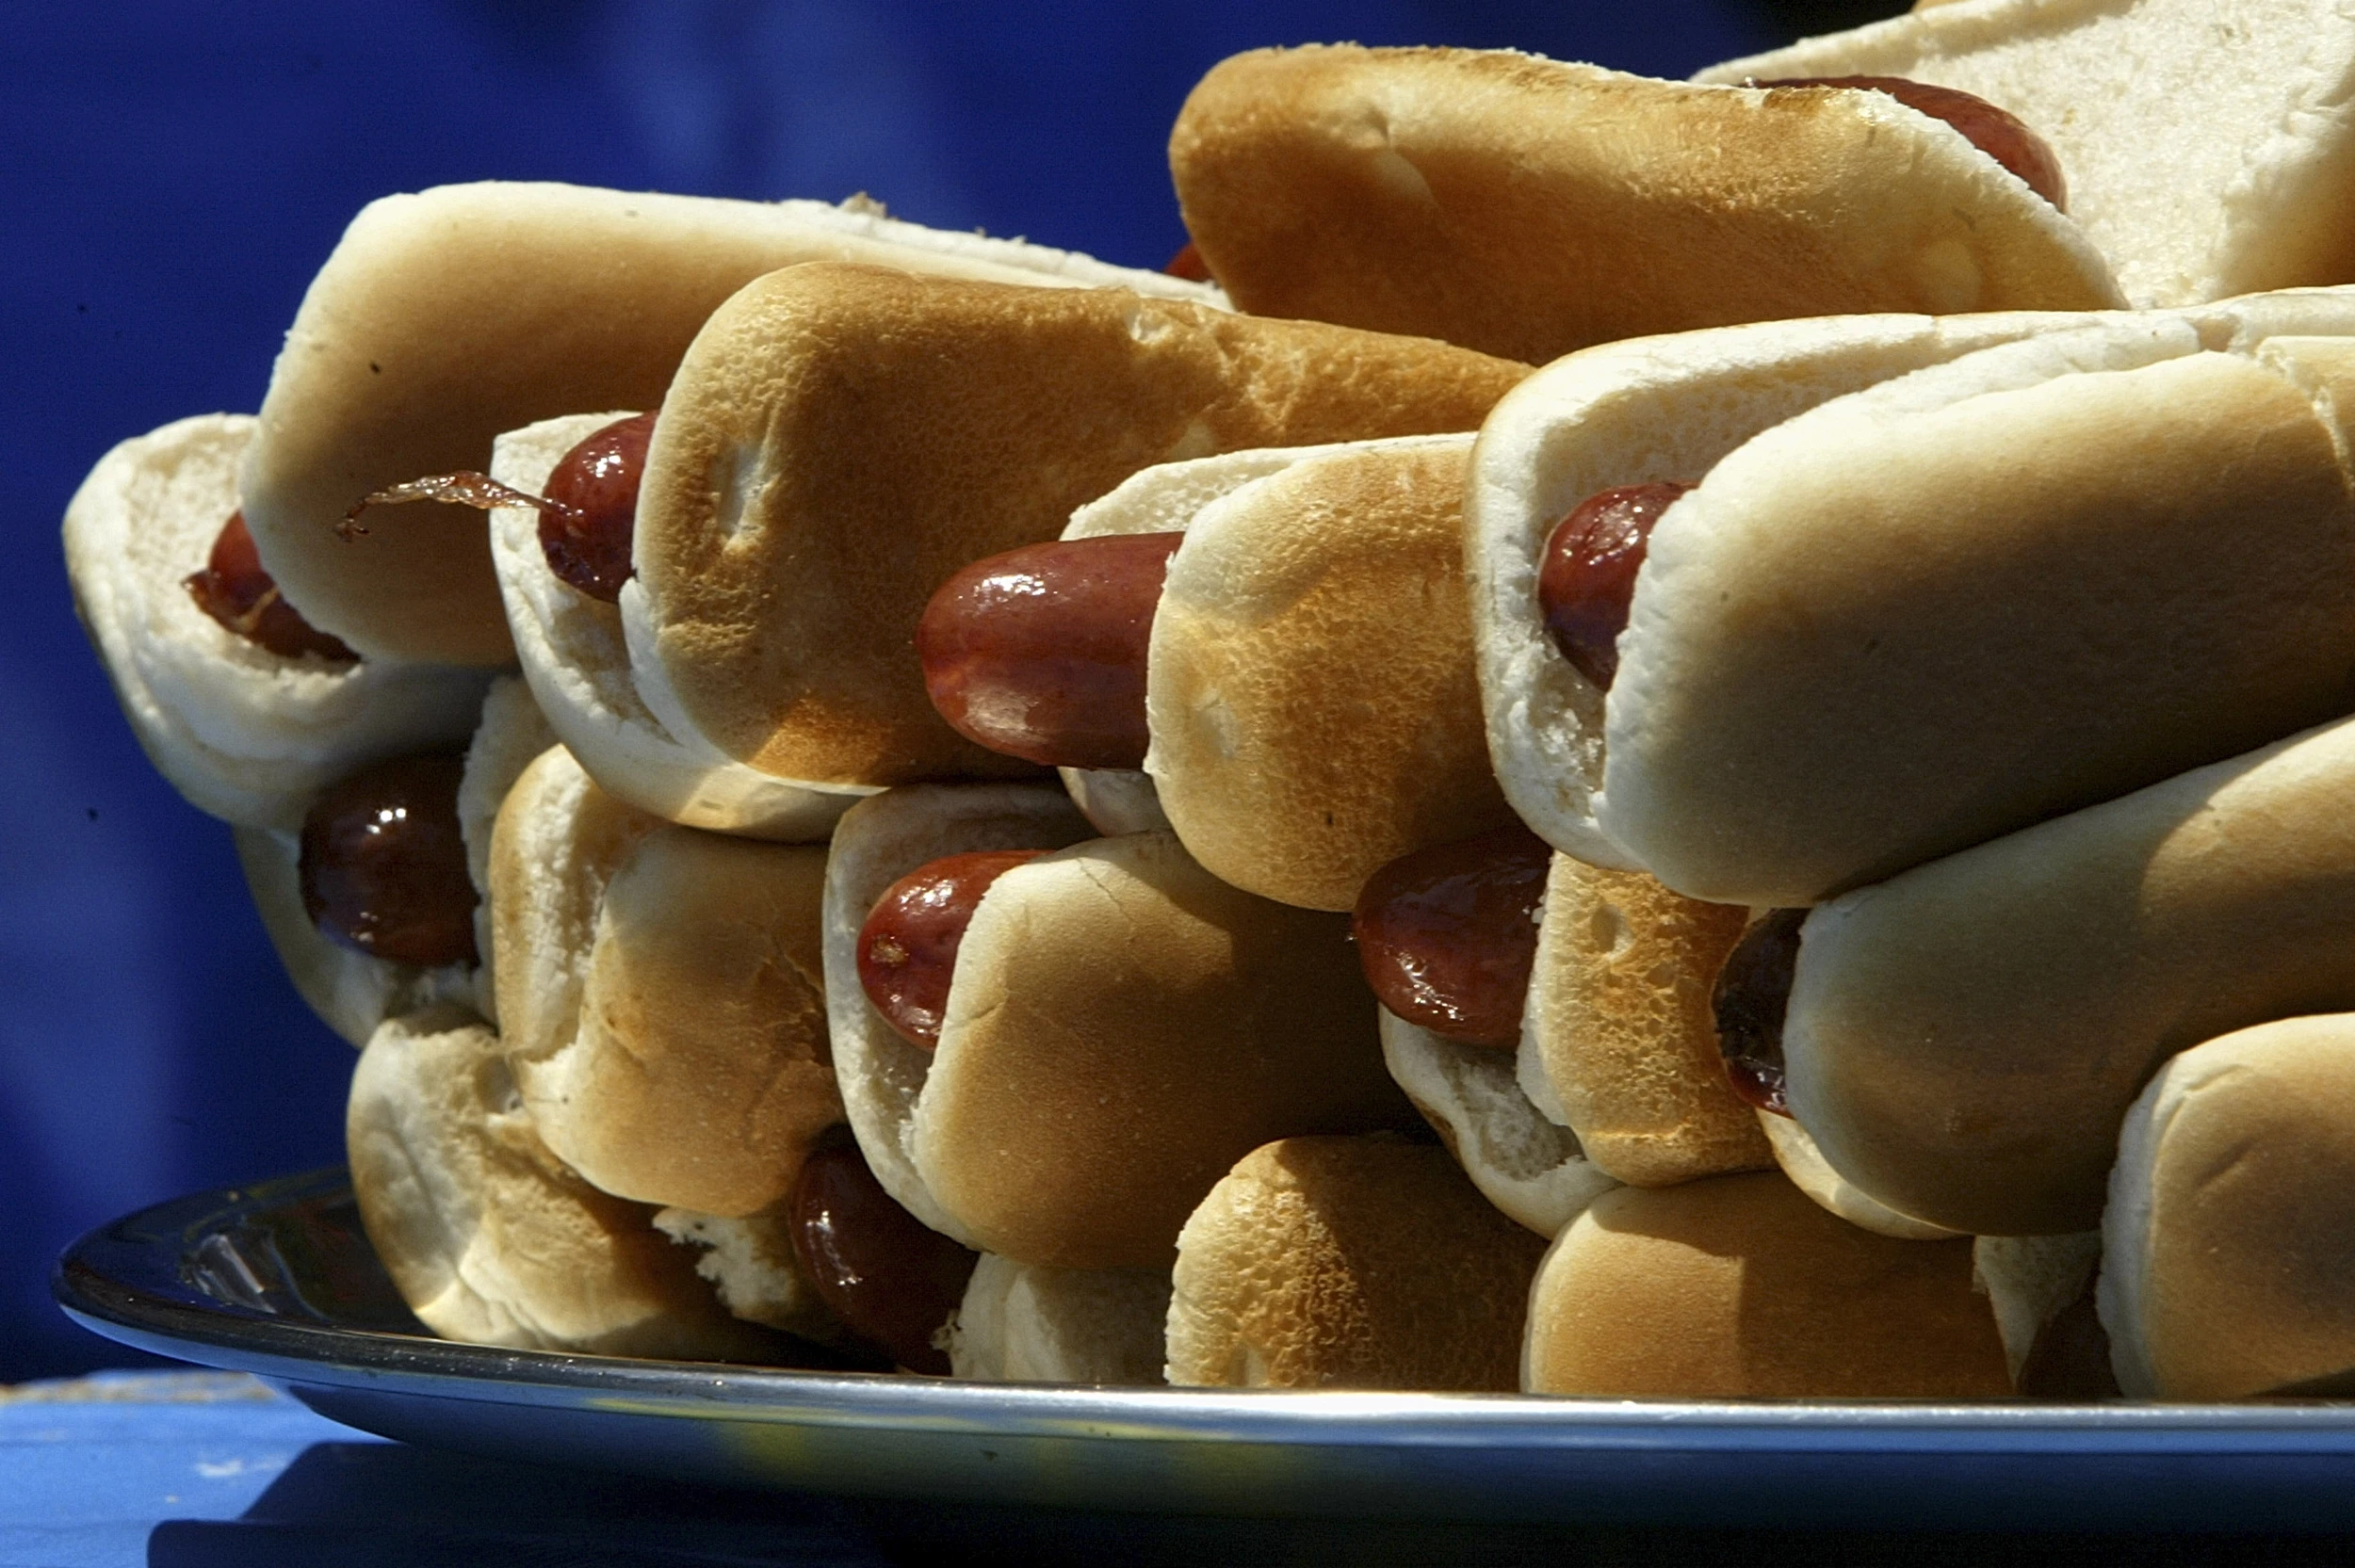 Sam's Club vs Costco—Who Has the Better Hot Dog?